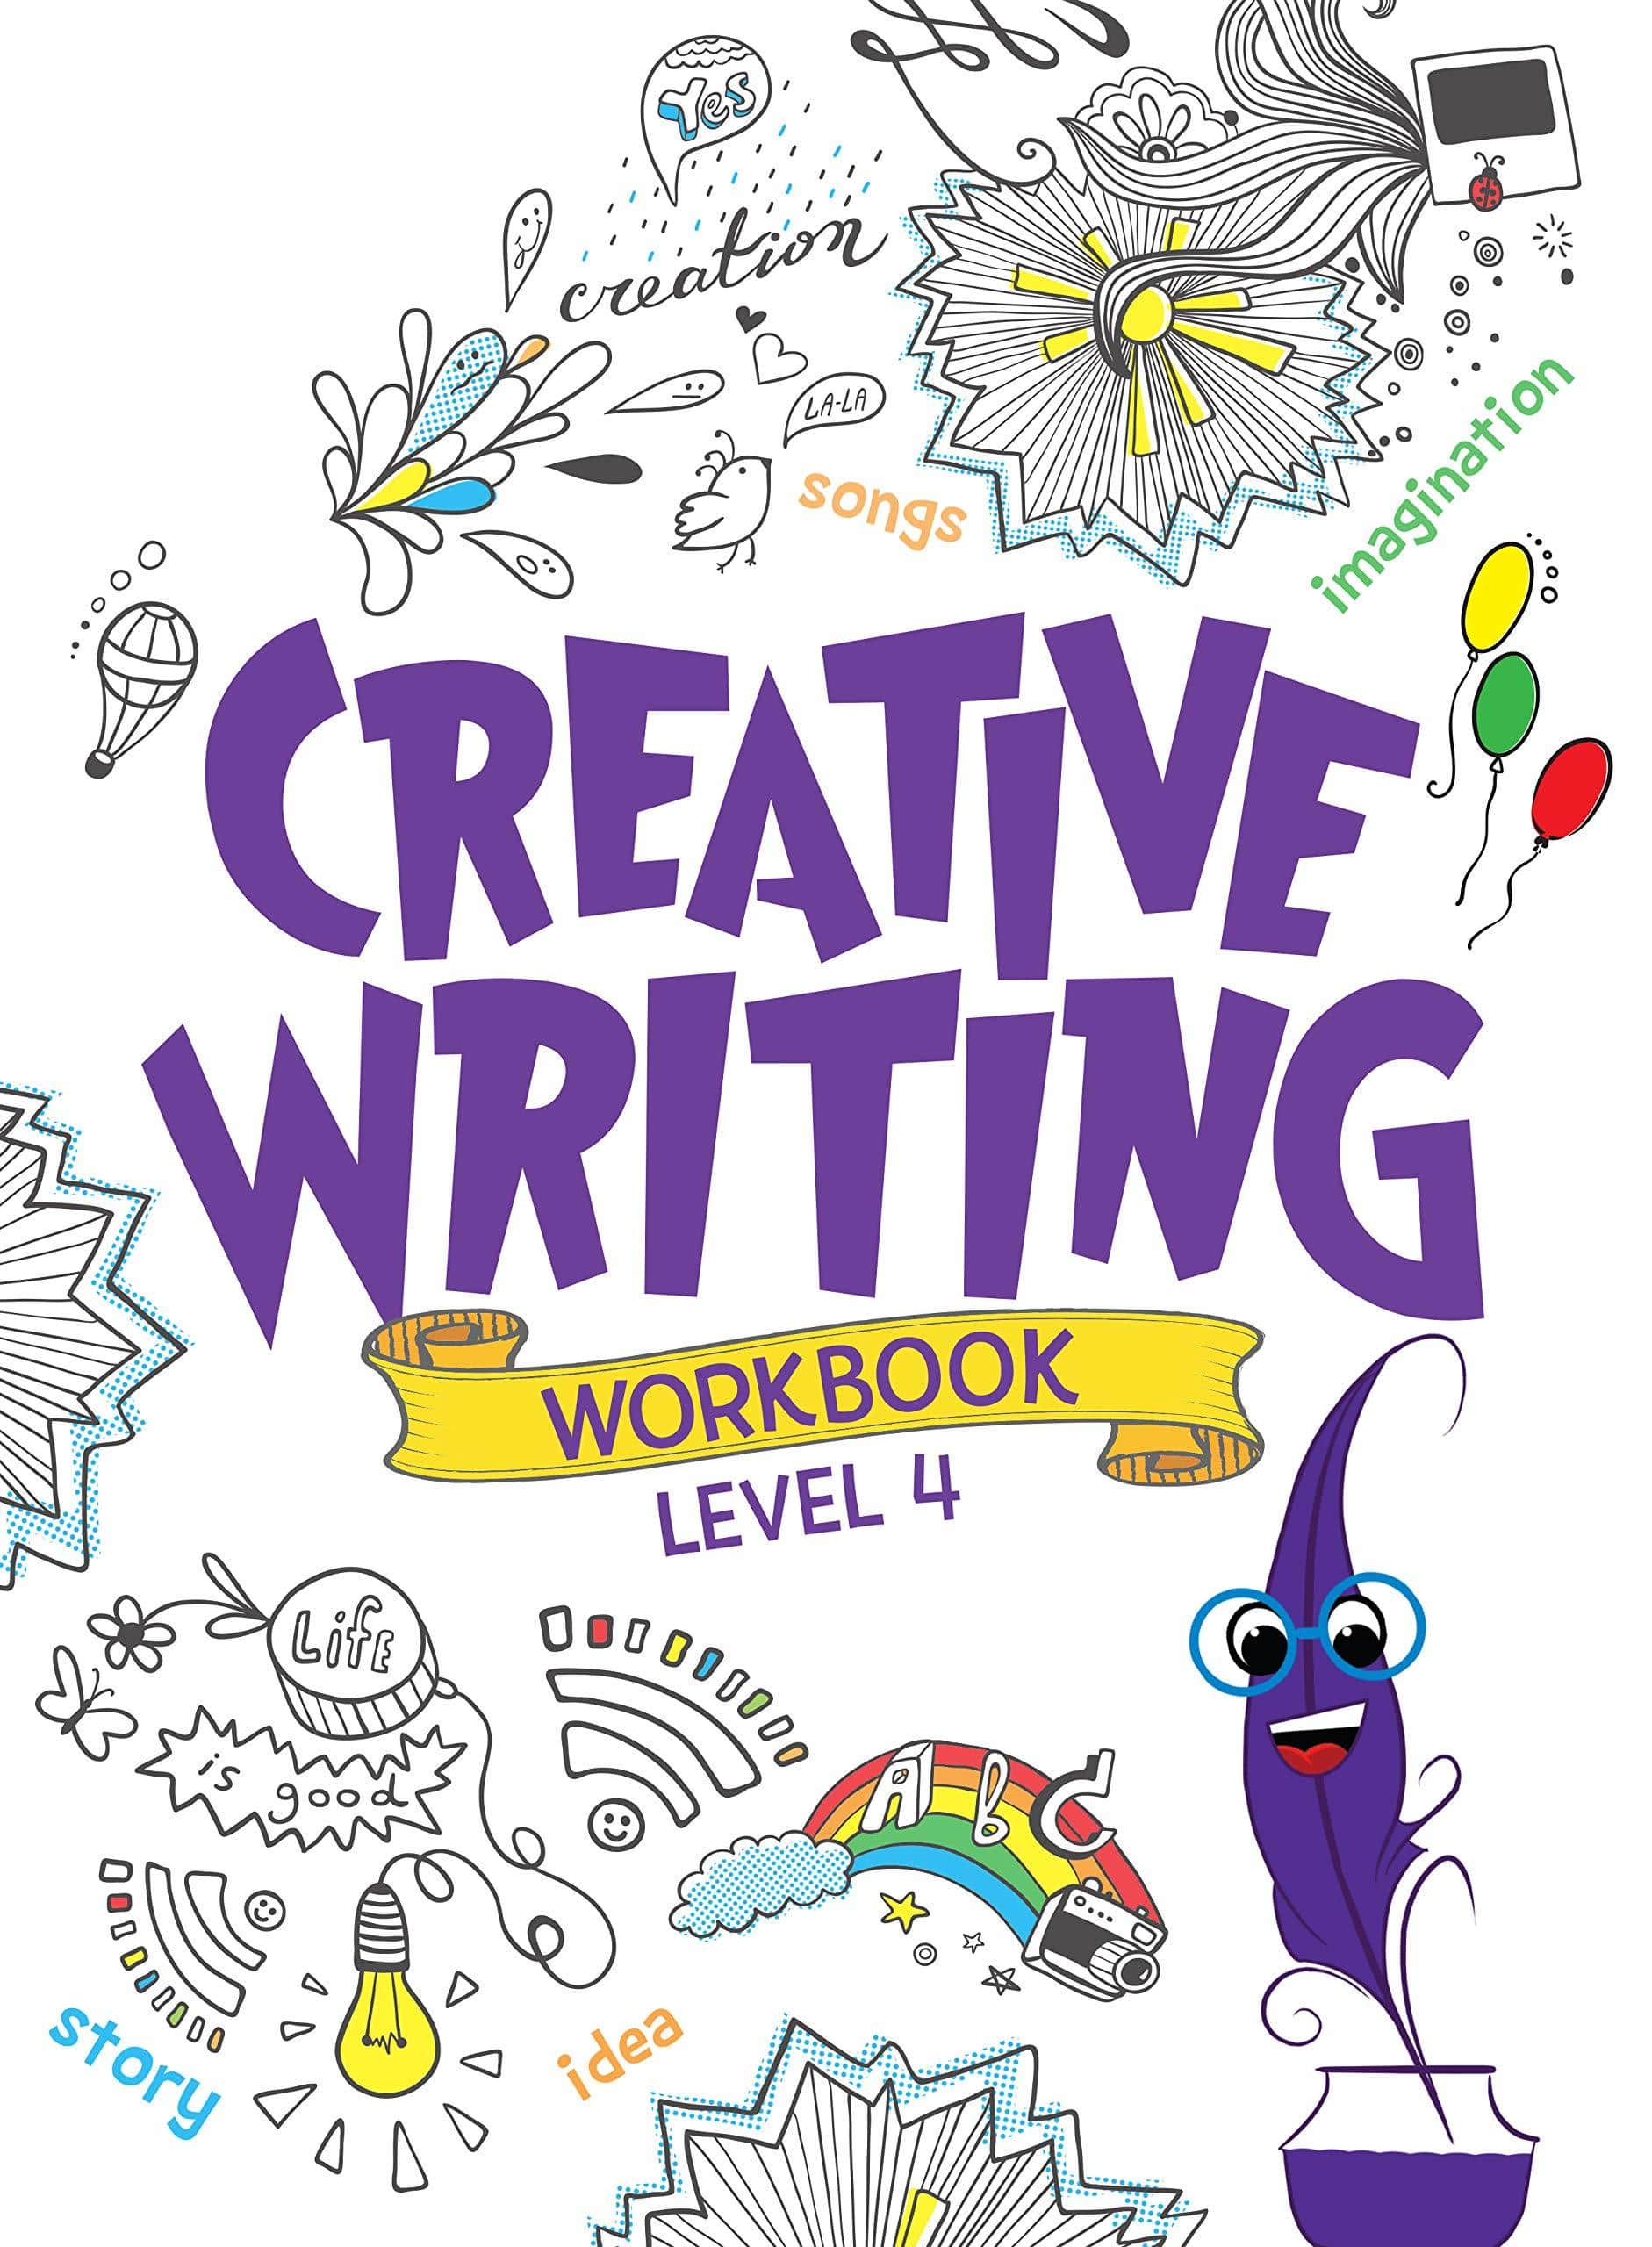 CREATIVE WRITING WORKBOOK 4